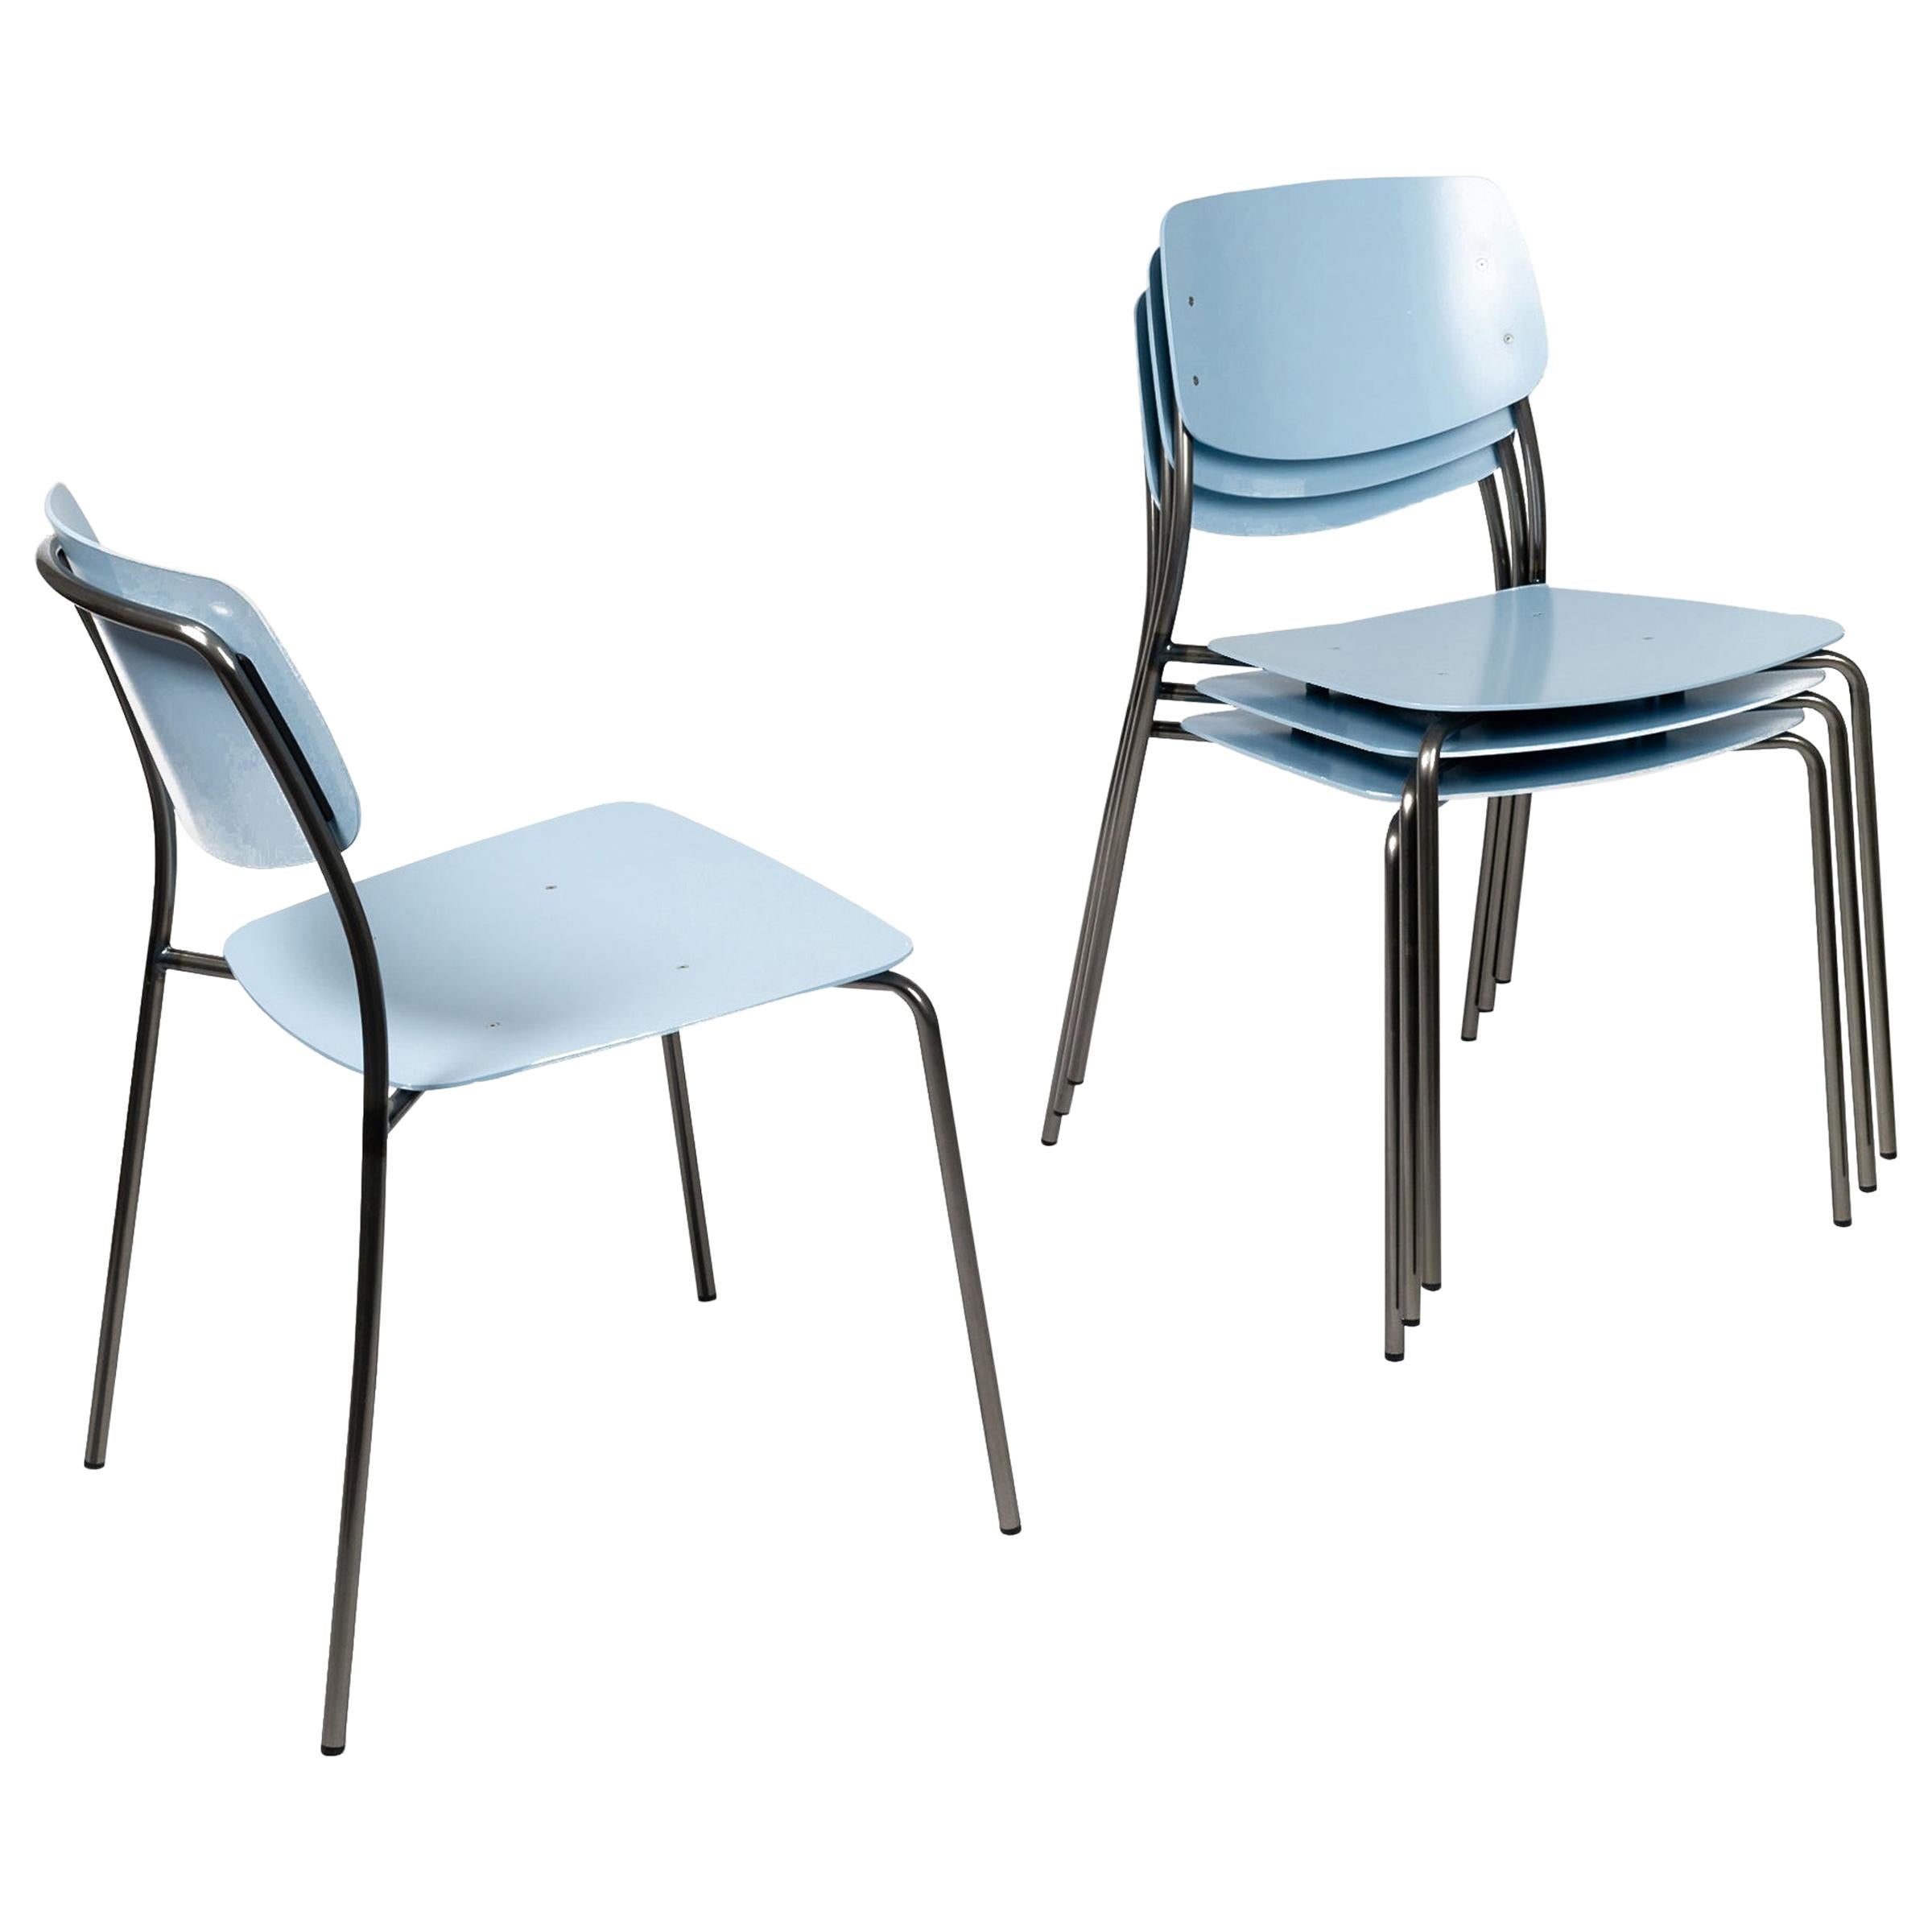 Arik Levy Blue,  Felber C18 Indoor/Outdoor chairs by Dietiker , Set of 4